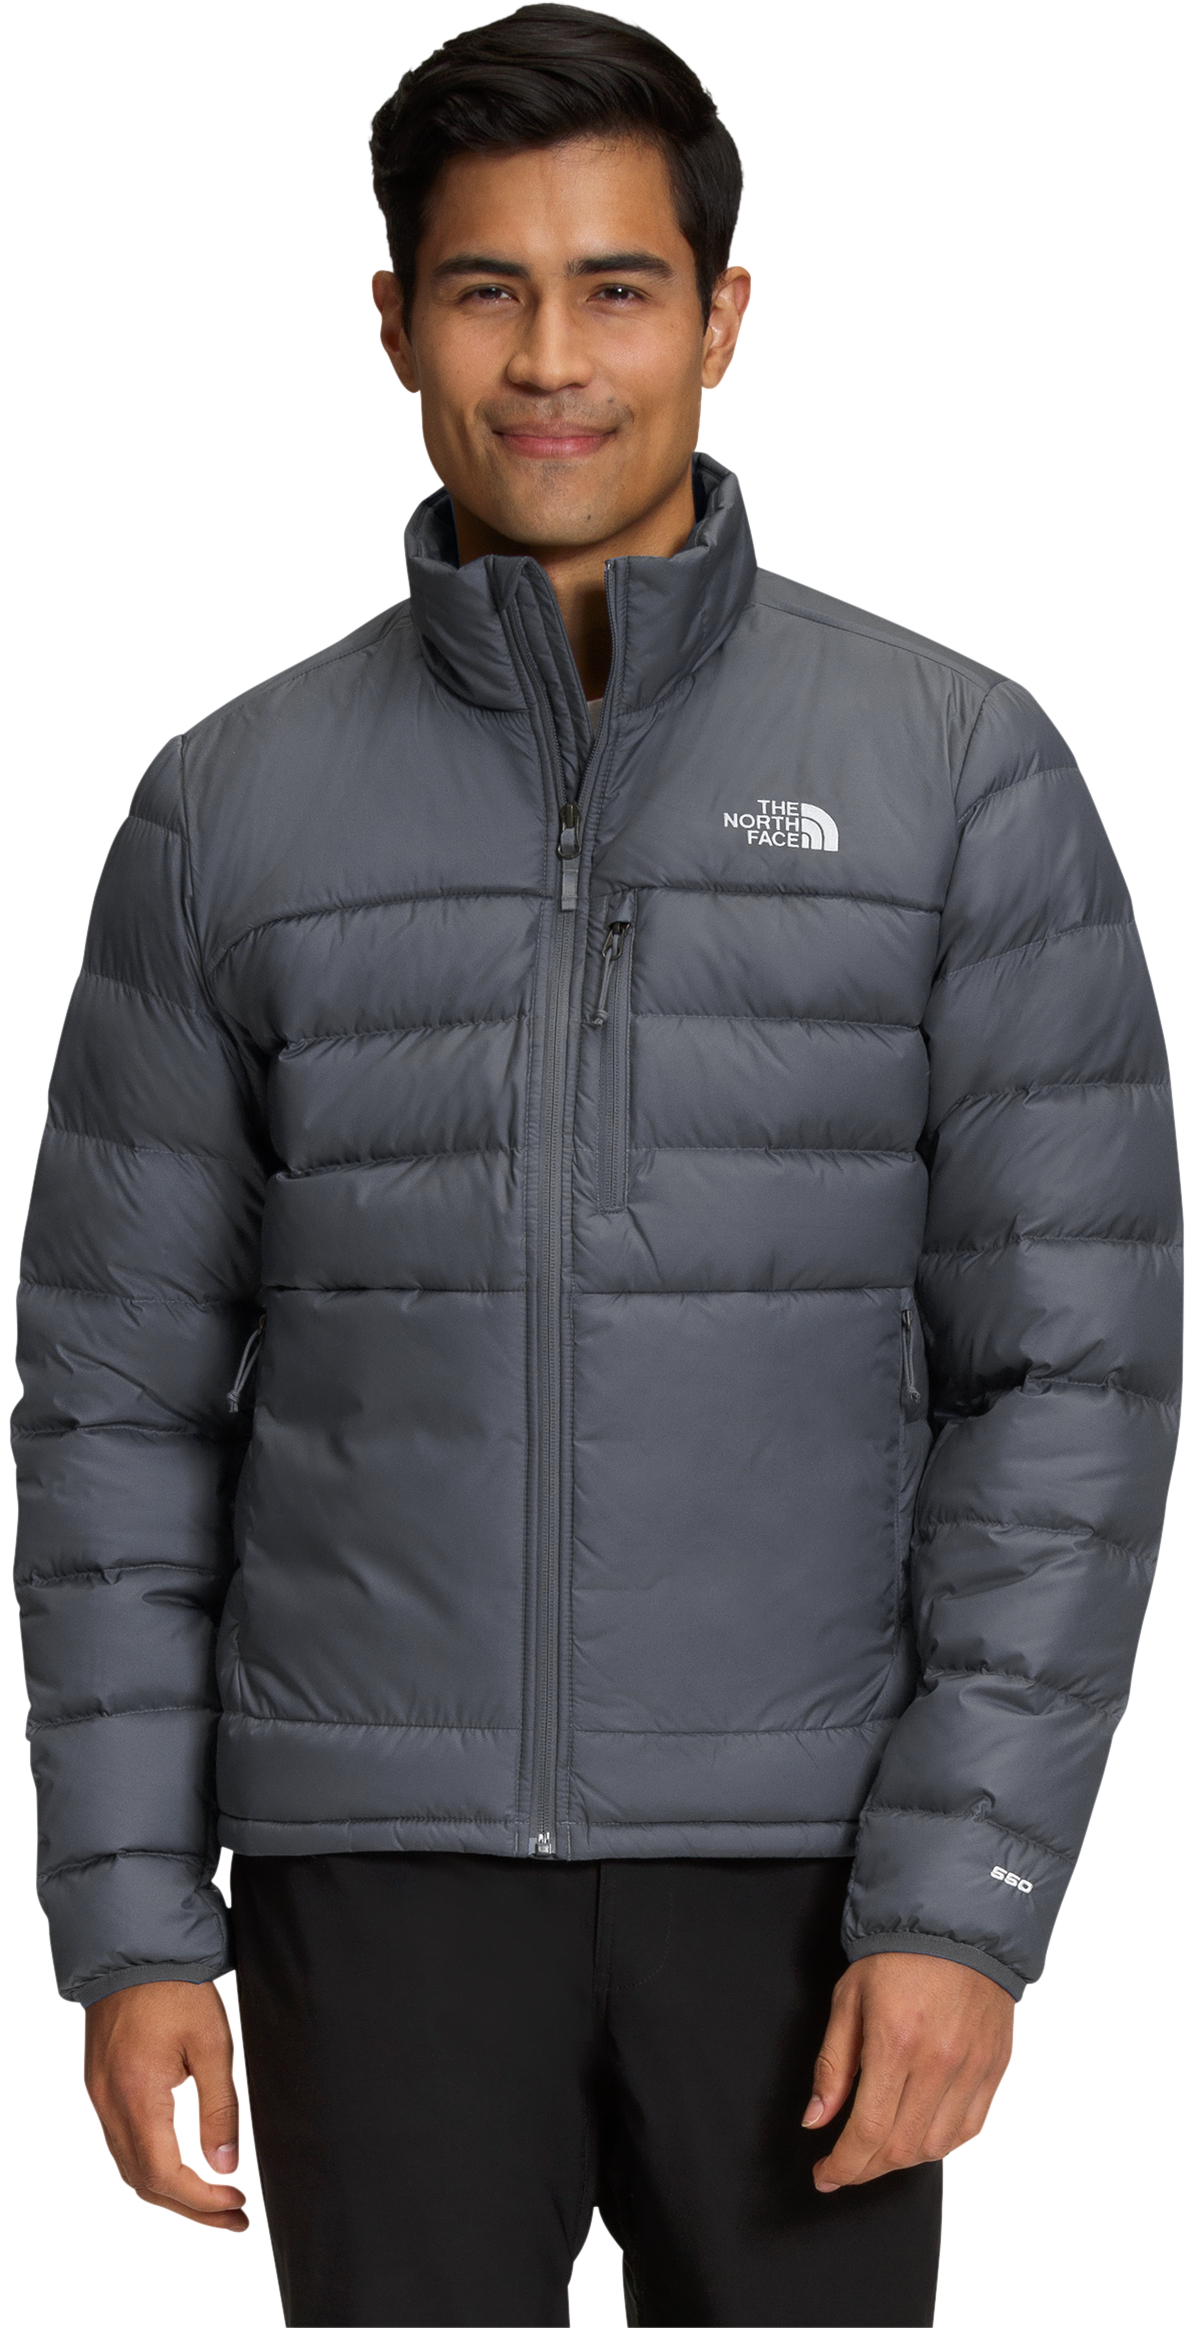 The North Face Aconcagua 2 Jacket for Men - Vanadis Grey - M